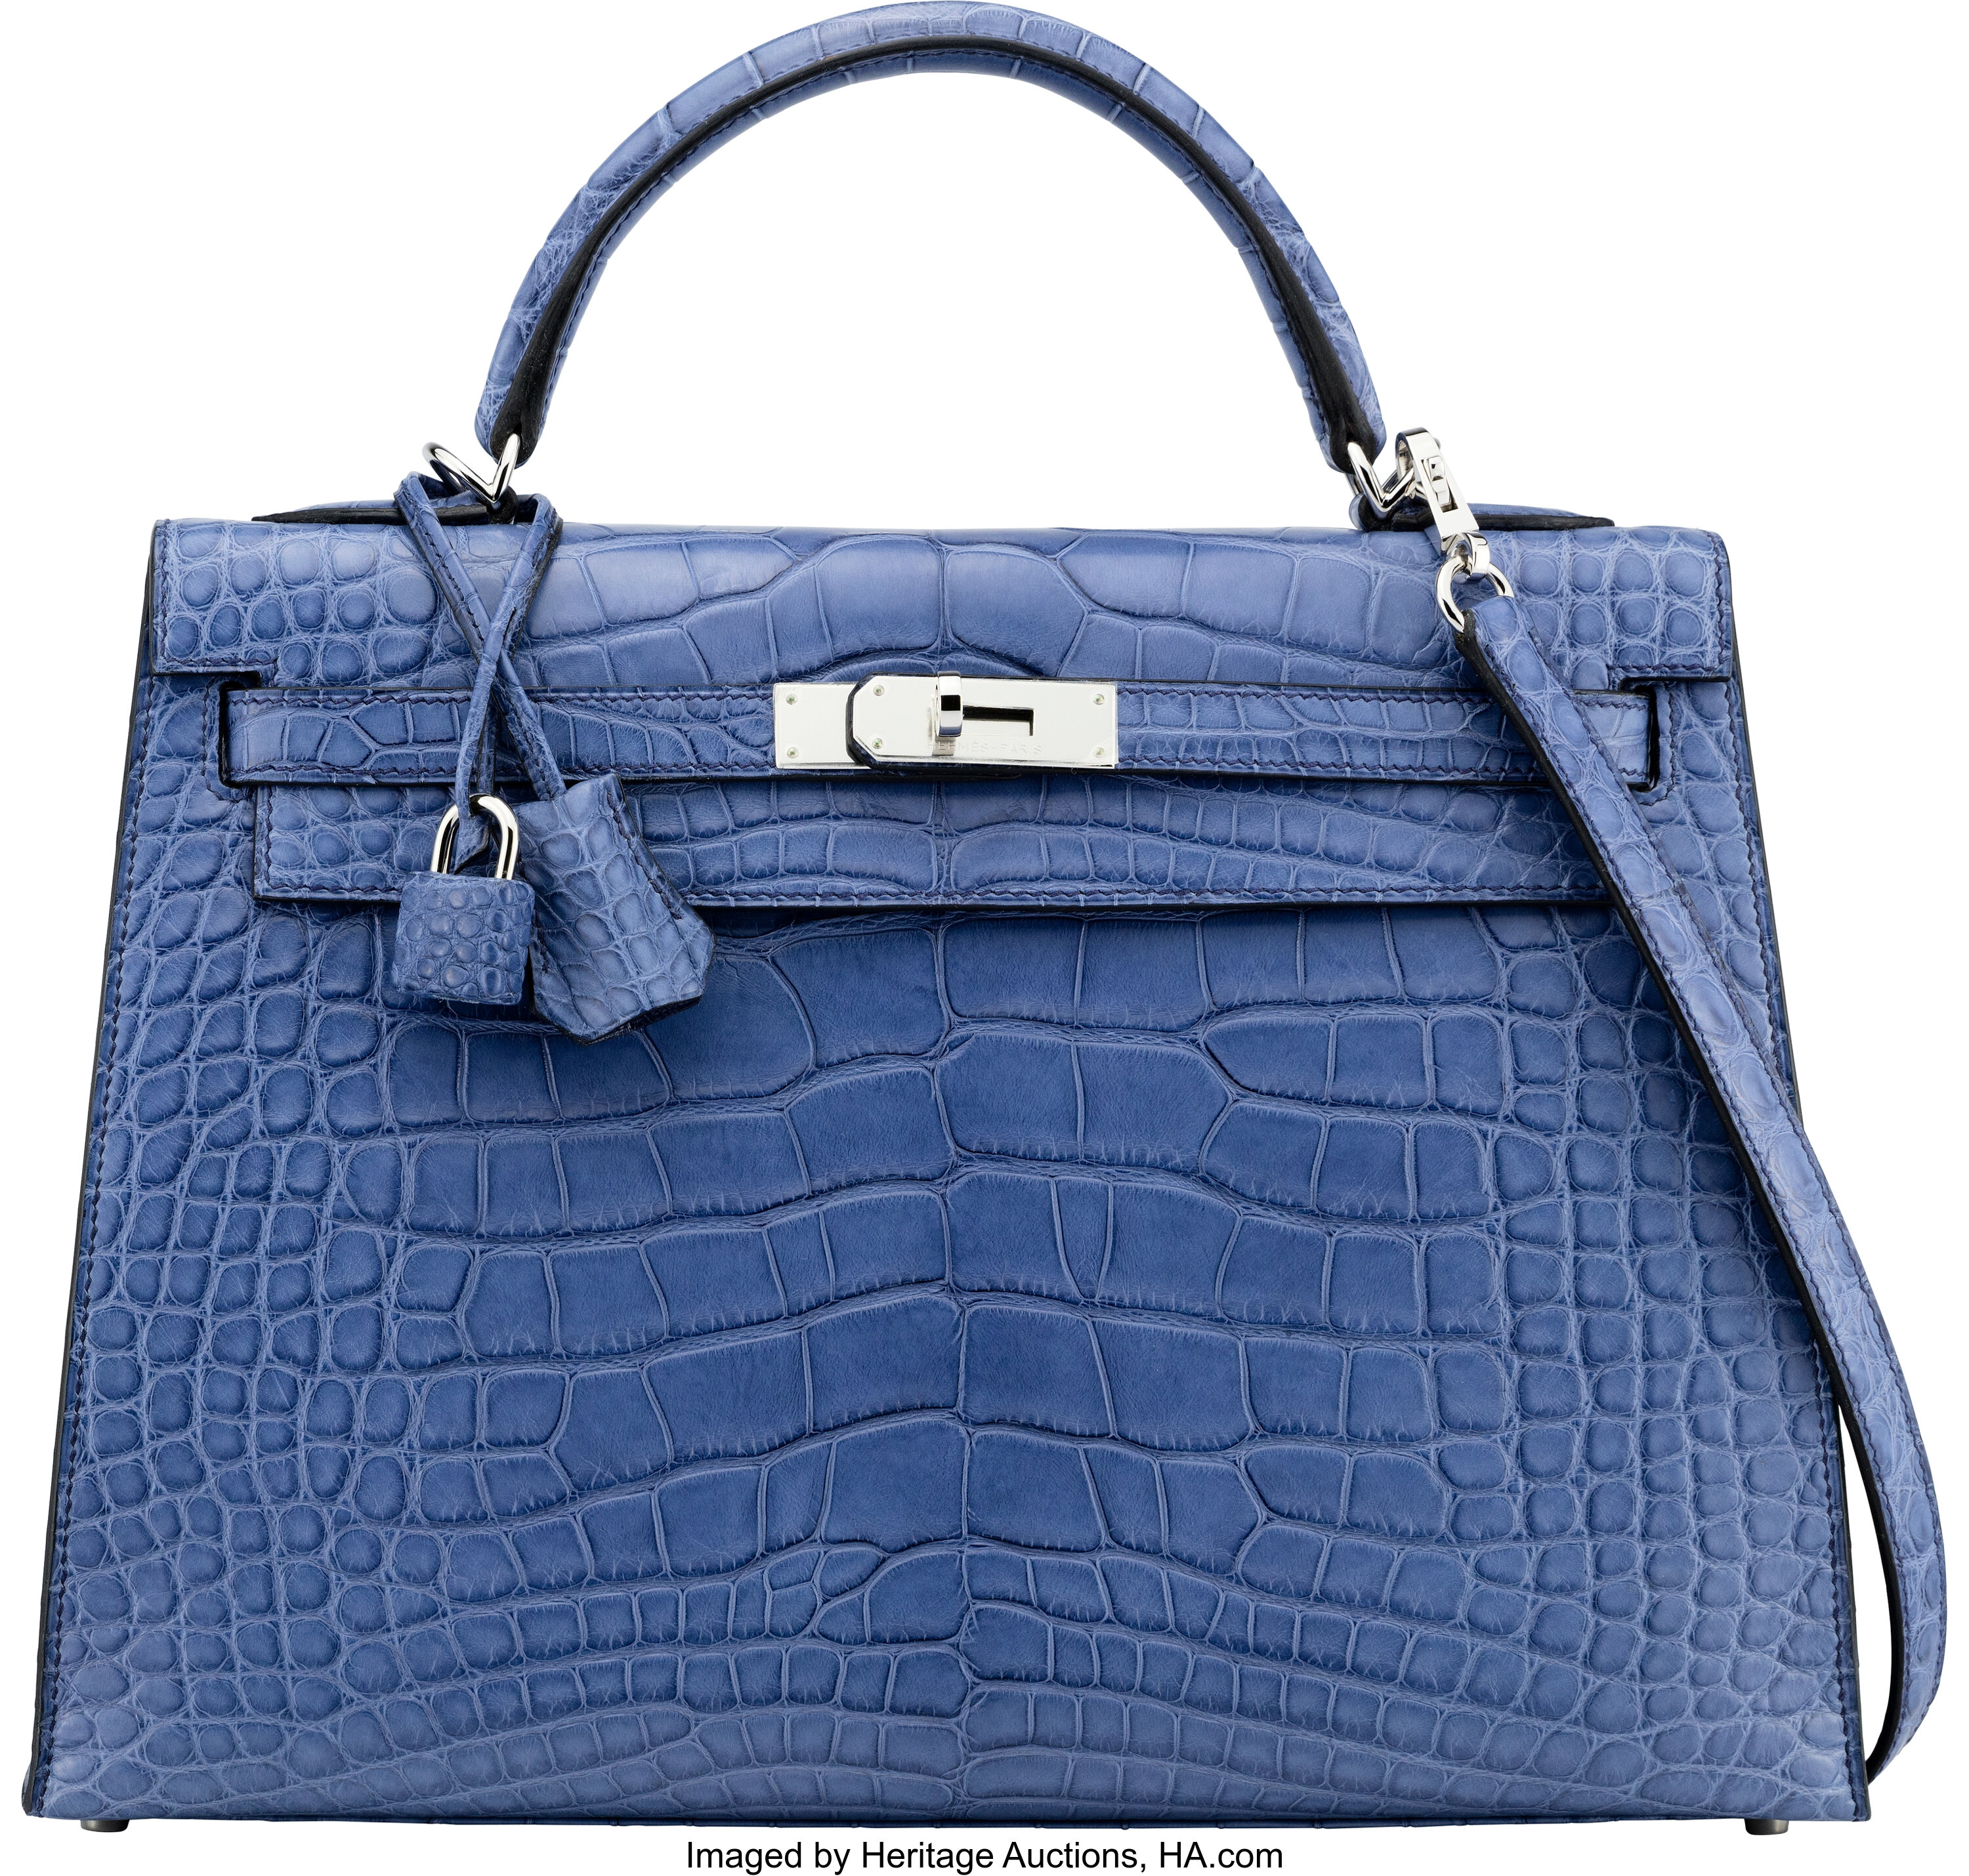 Hermès 32cm Matte Blue Brighton Alligator Sellier Kelly Bag with